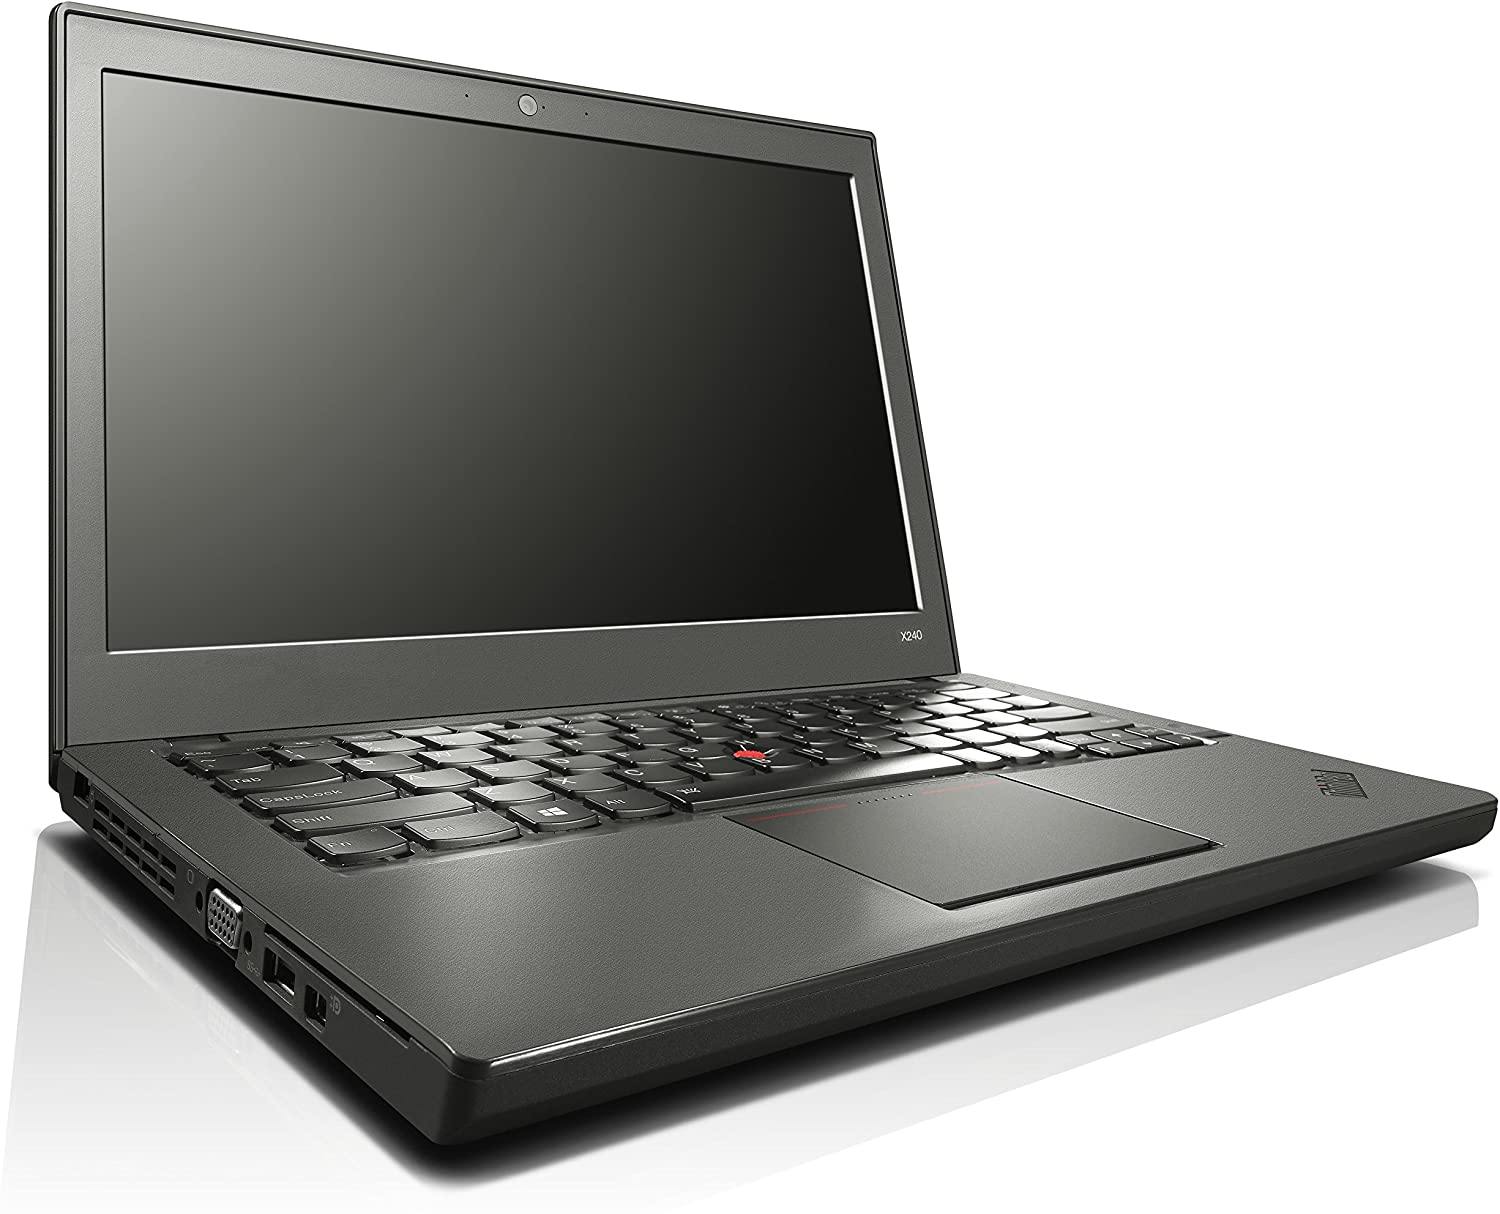 Copy of Lenovo Thinkpad X240 i5 4300u 1.9GHz 8GB Ram 256GB SSD Windows 10 Pro. Refurbished - Atlas Computers & Electronics 